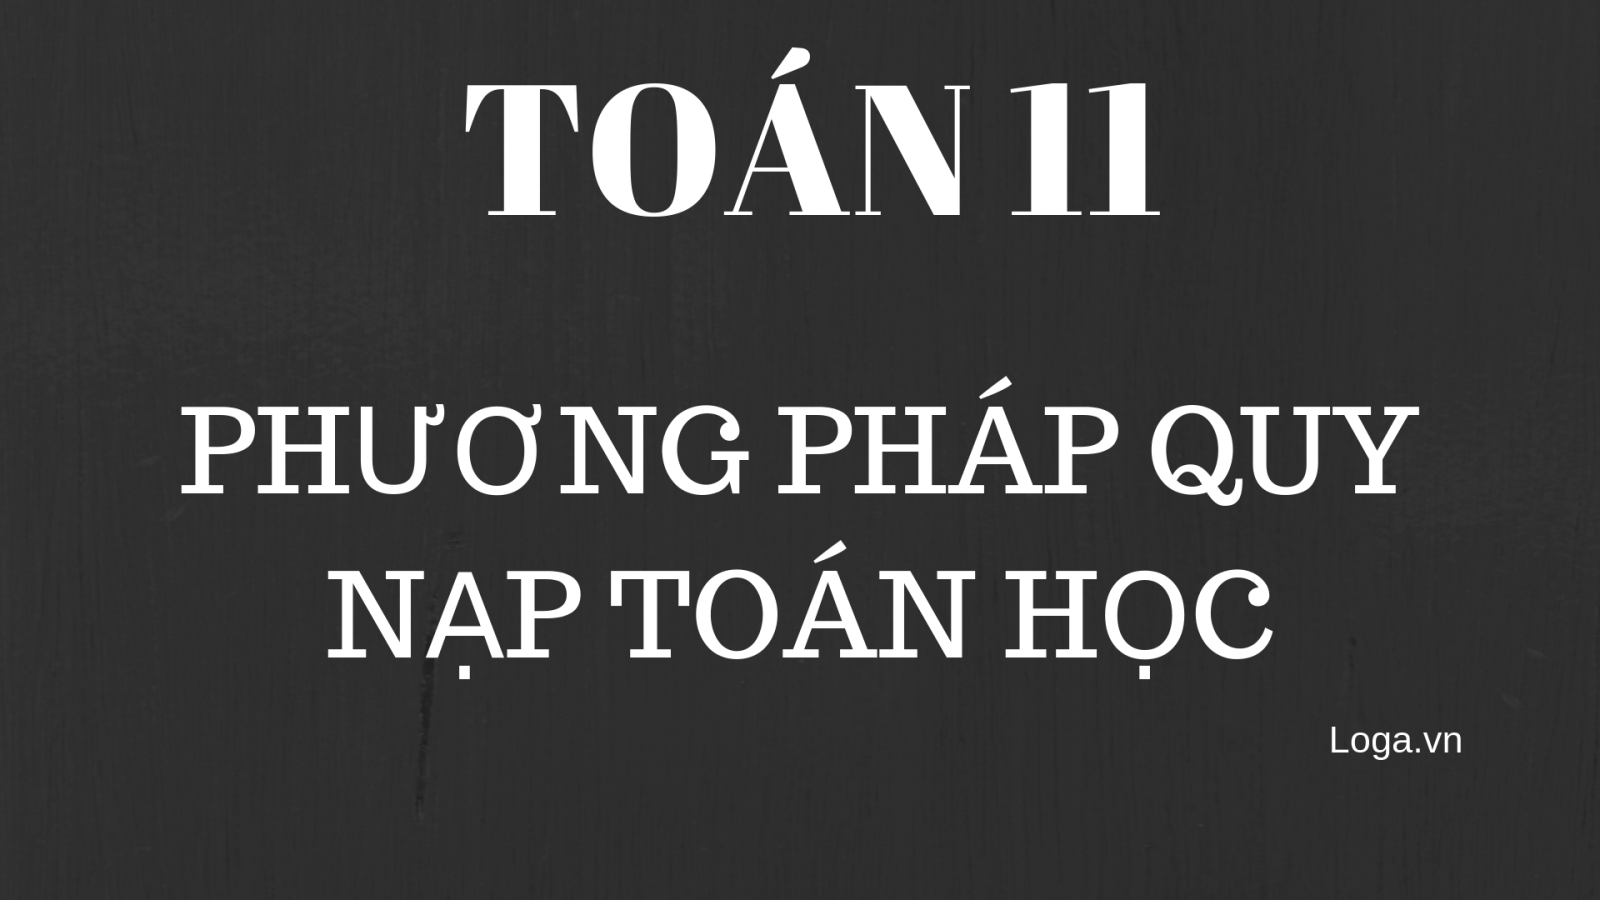 toan-11-phuong-phap-quy-nap-toan-hoc